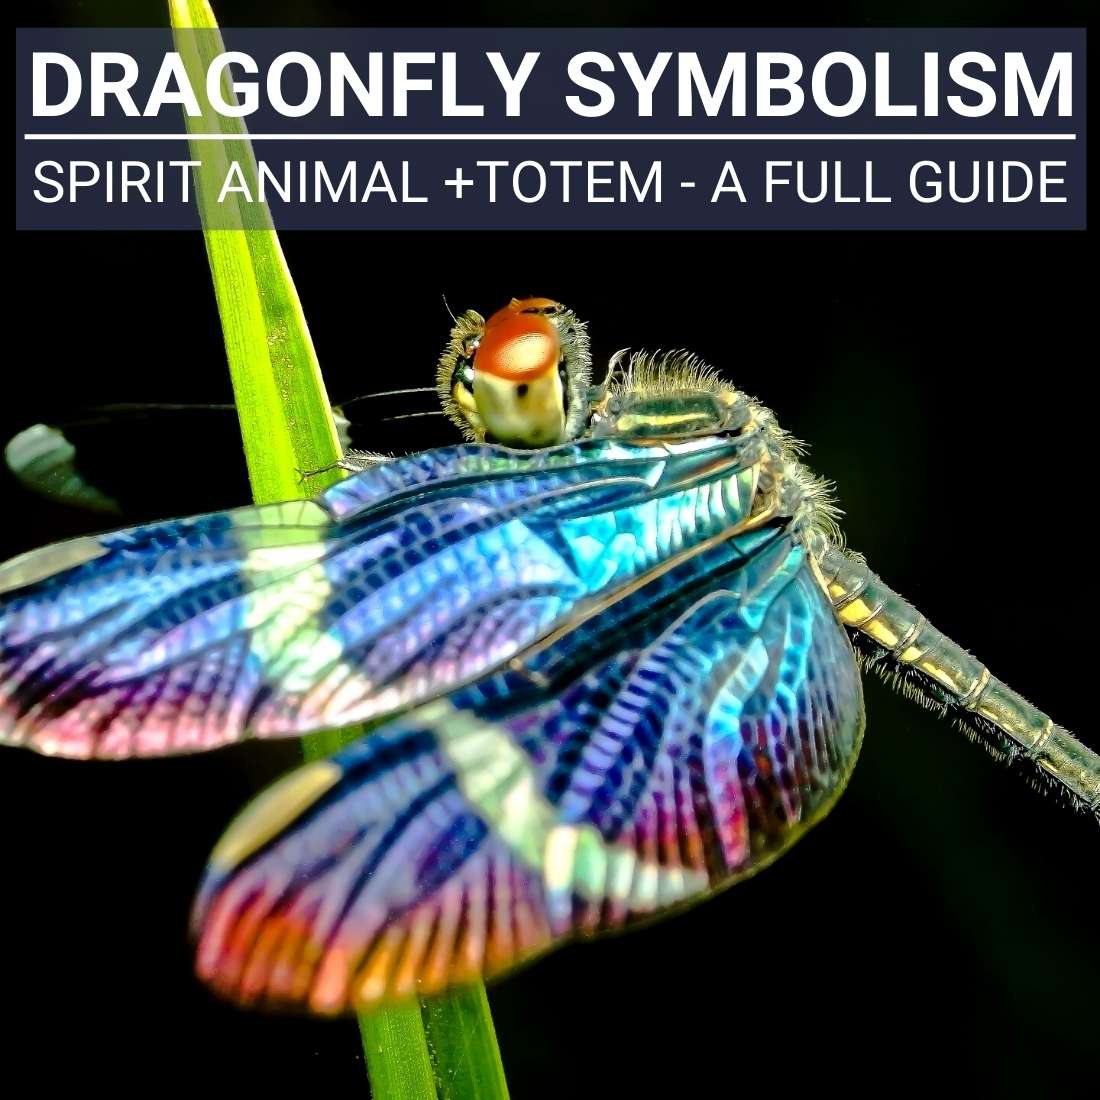 Dragonfly Symbolism - Spirit Animal +Totem - A Full Guide